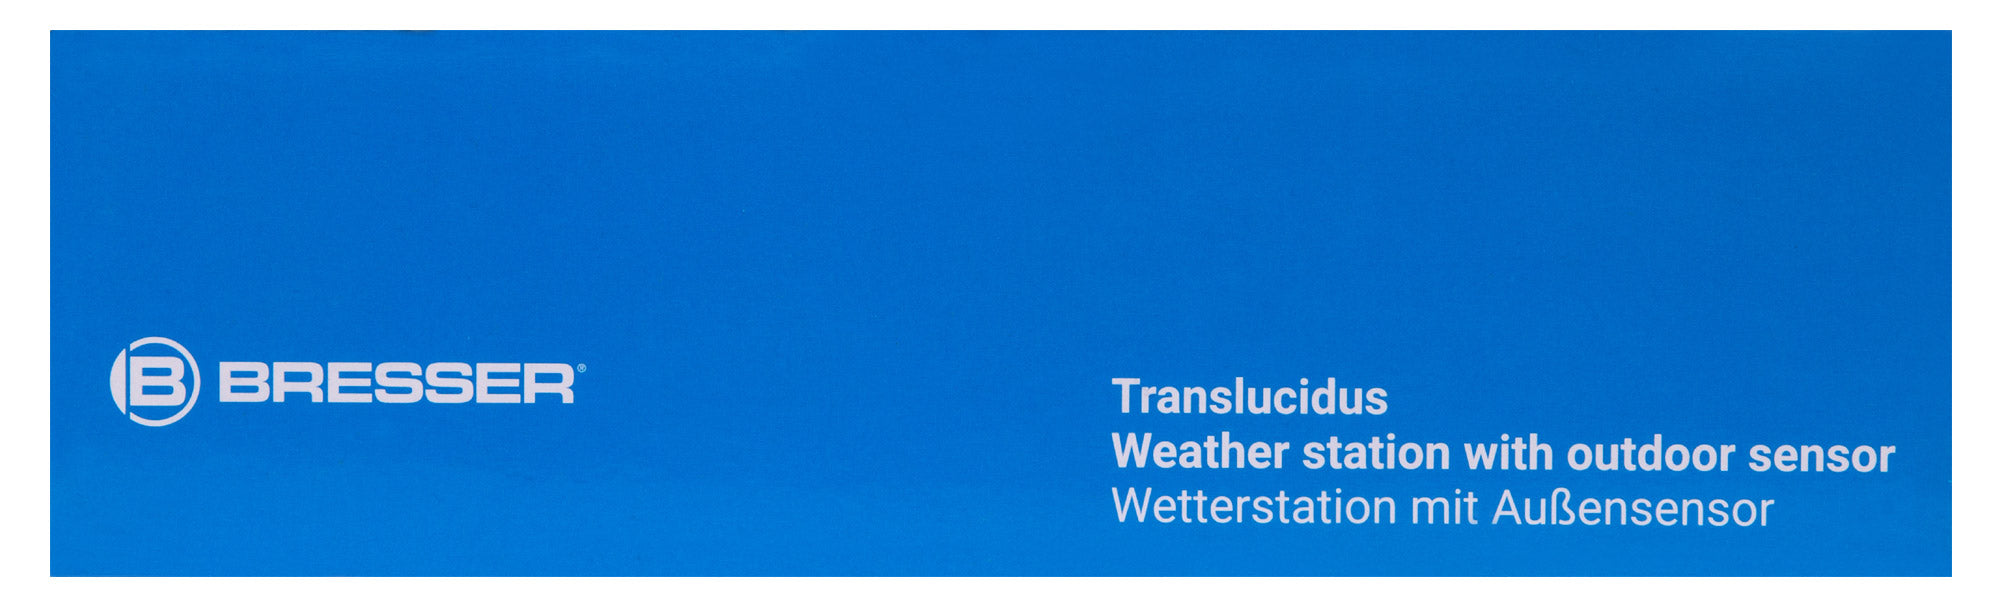 Bresser Translucidus RC Weather Station